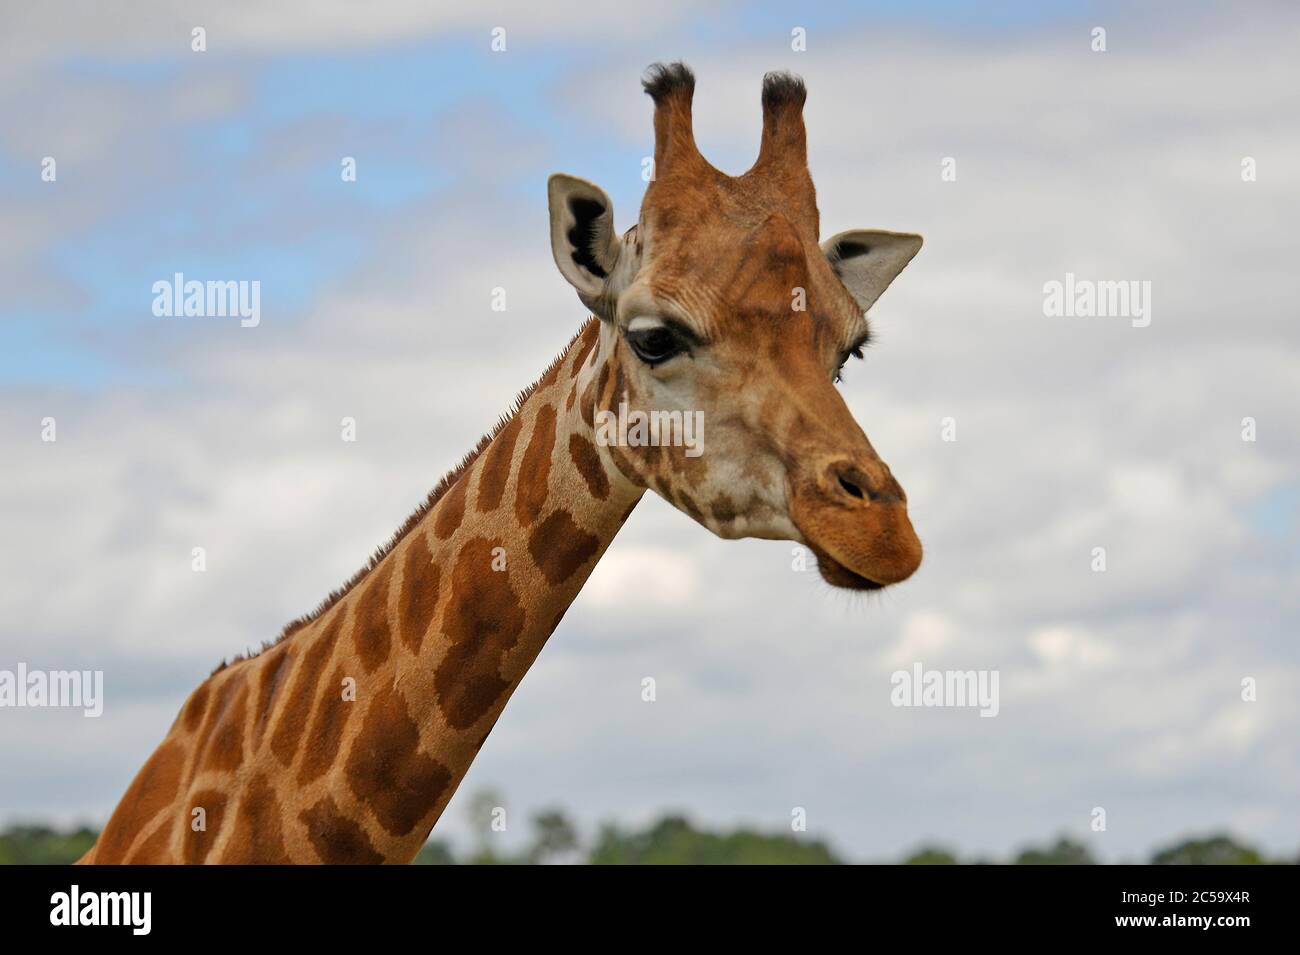 Giraffe at nature park Mervent France Stock Photo